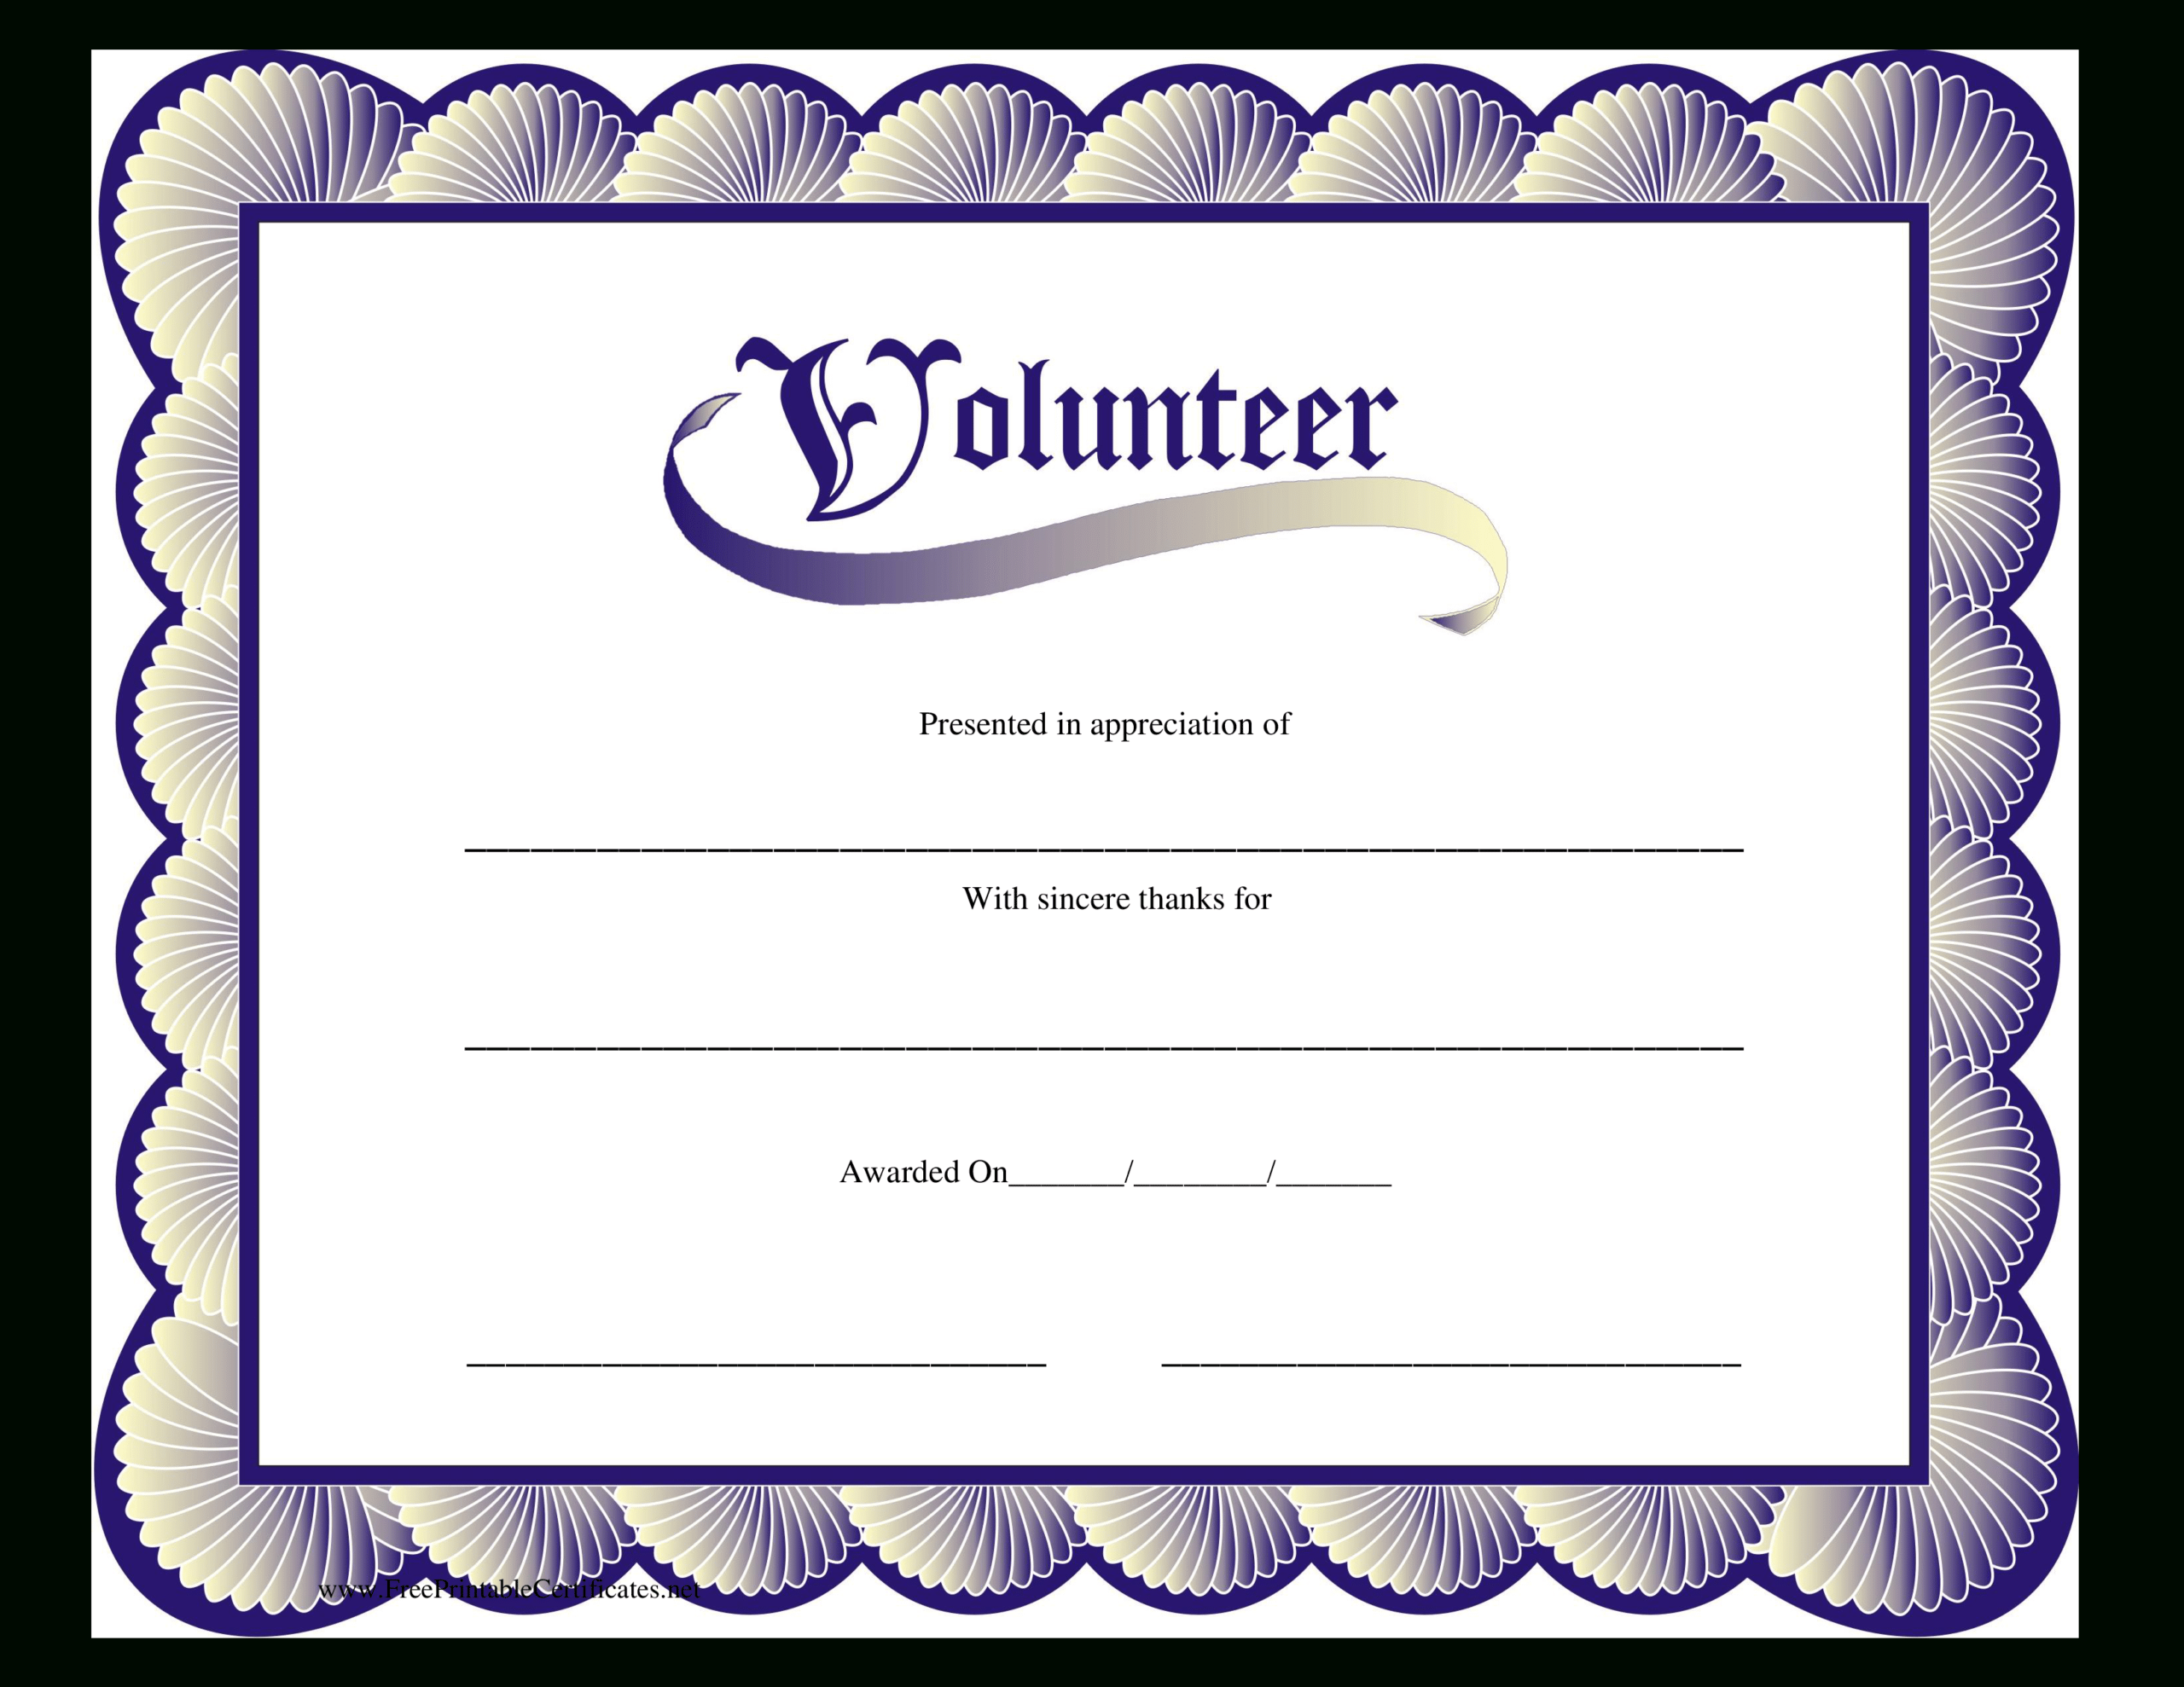 Volunteer Certificate | Templates At Allbusinesstemplates Throughout Volunteer Award Certificate Template